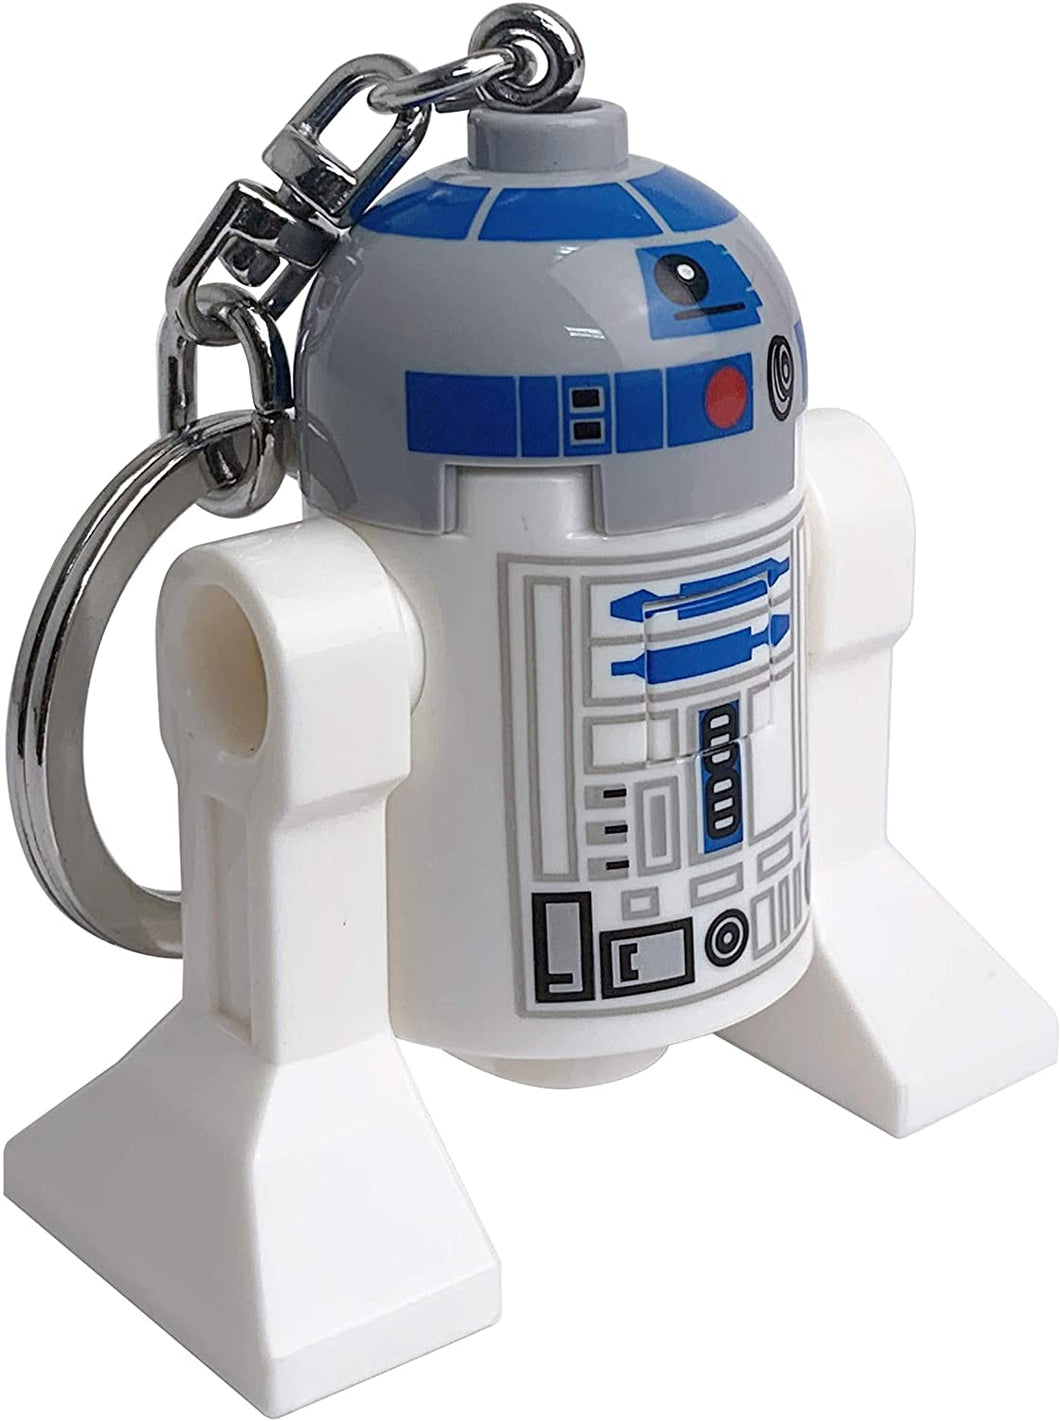 LEGO SW R2-D2 Droid Key Light